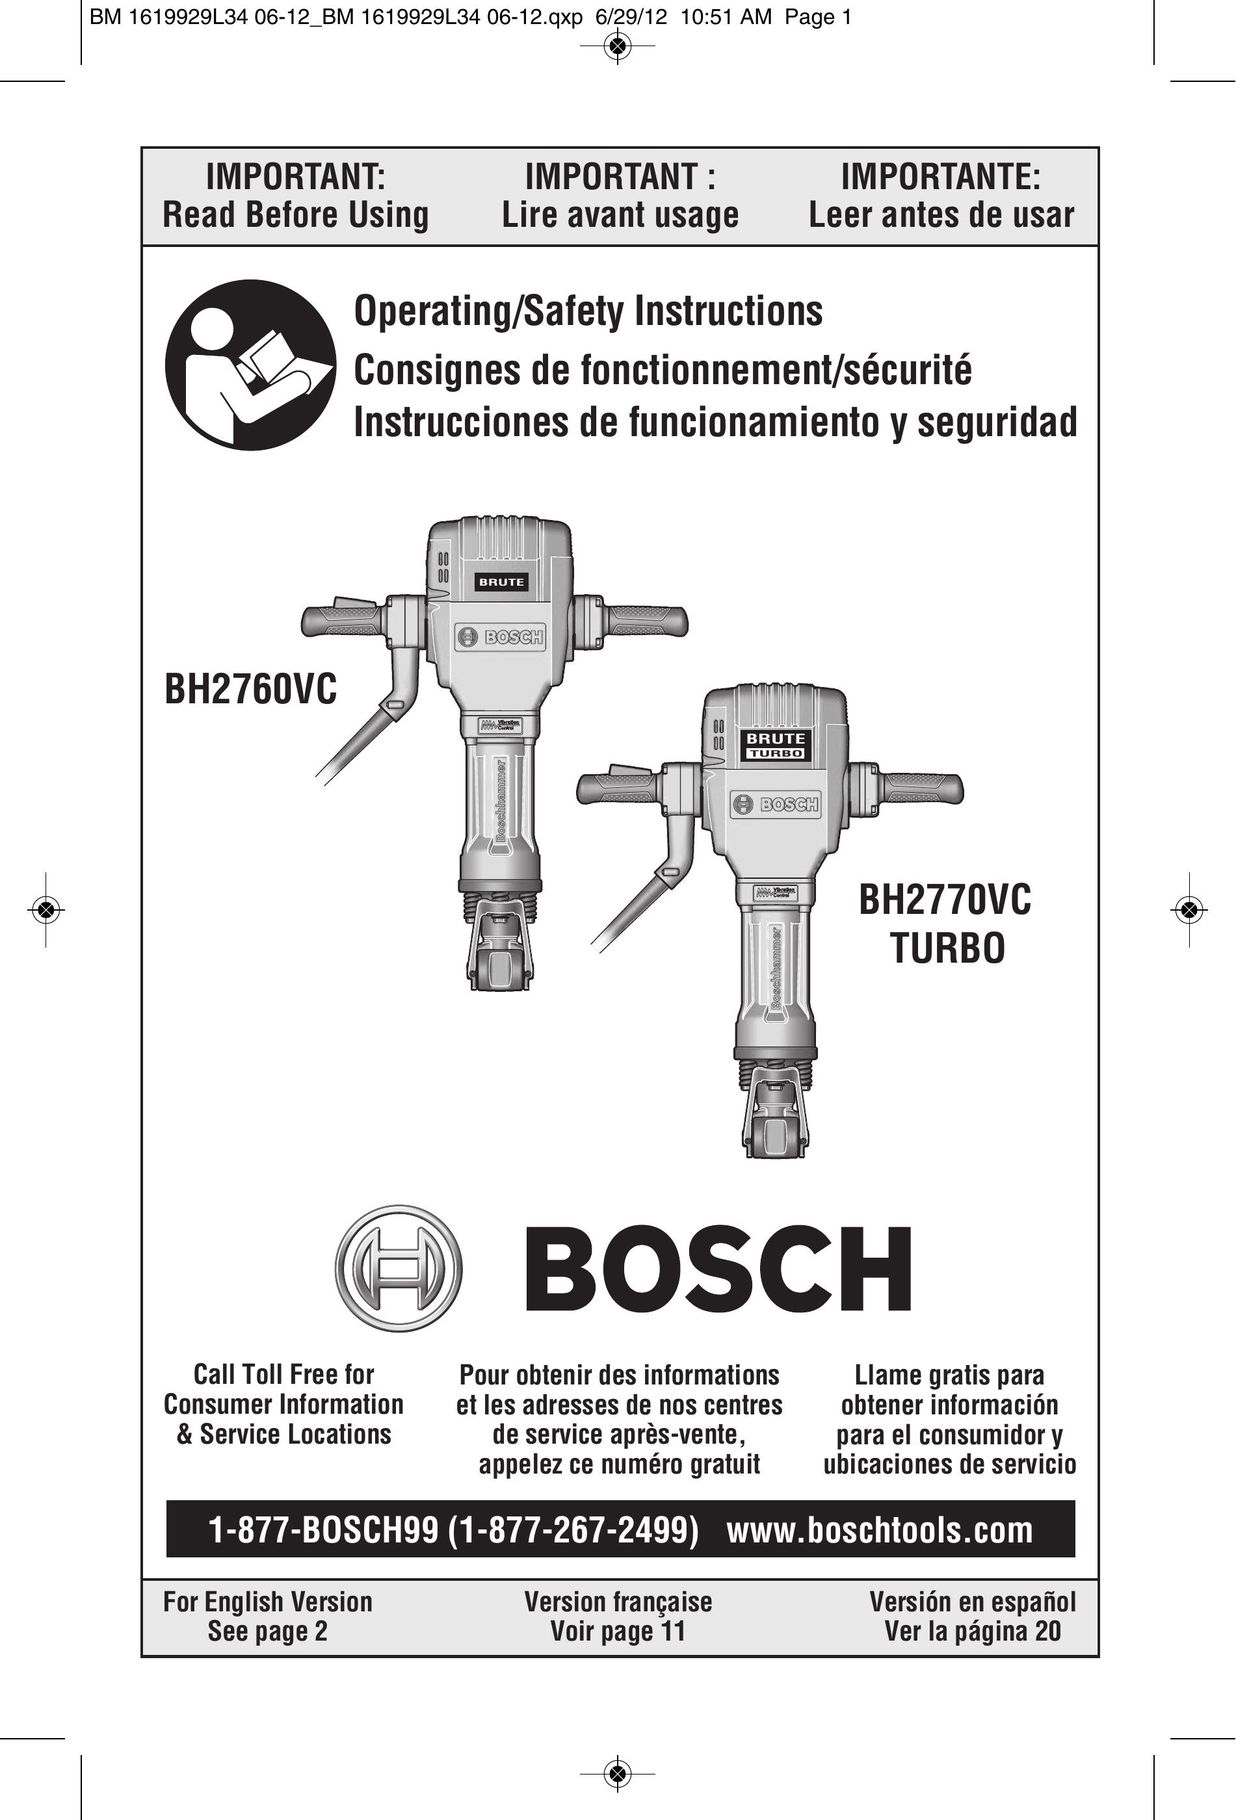 Bosch Power Tools BH2760VCB Power Hammer User Manual